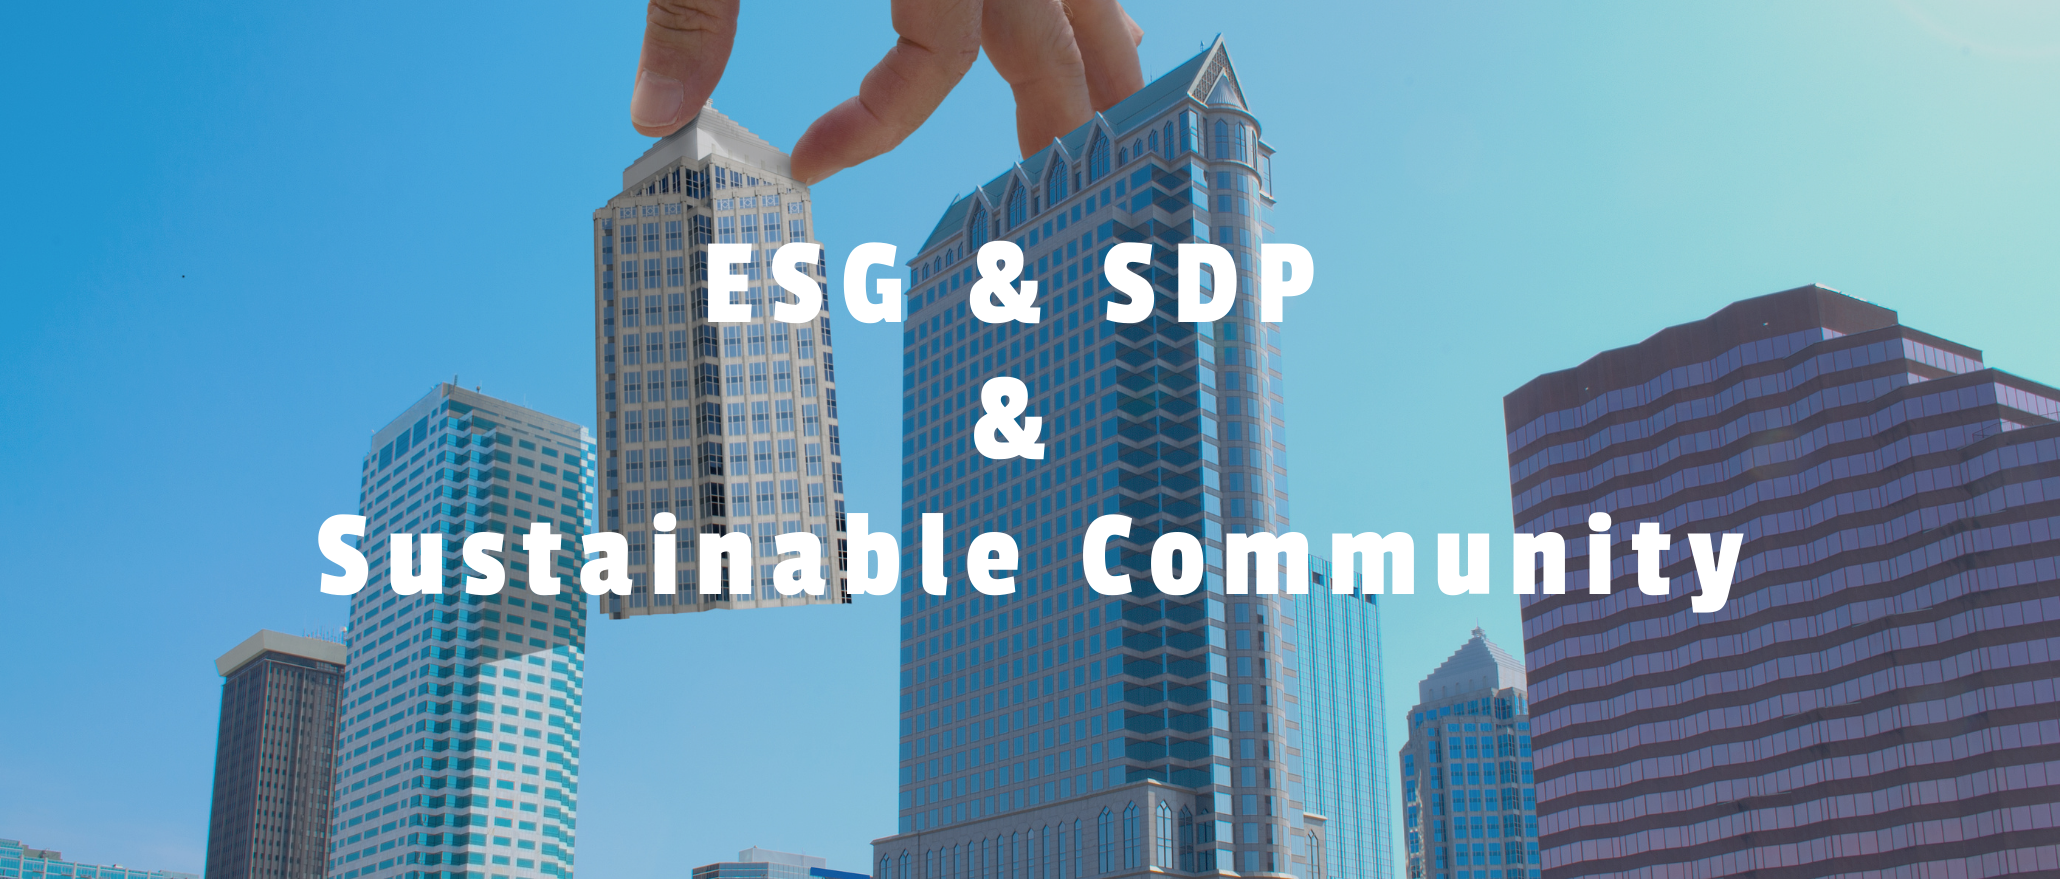 ESG & SDP & Sustainable Communuty 可持續社區